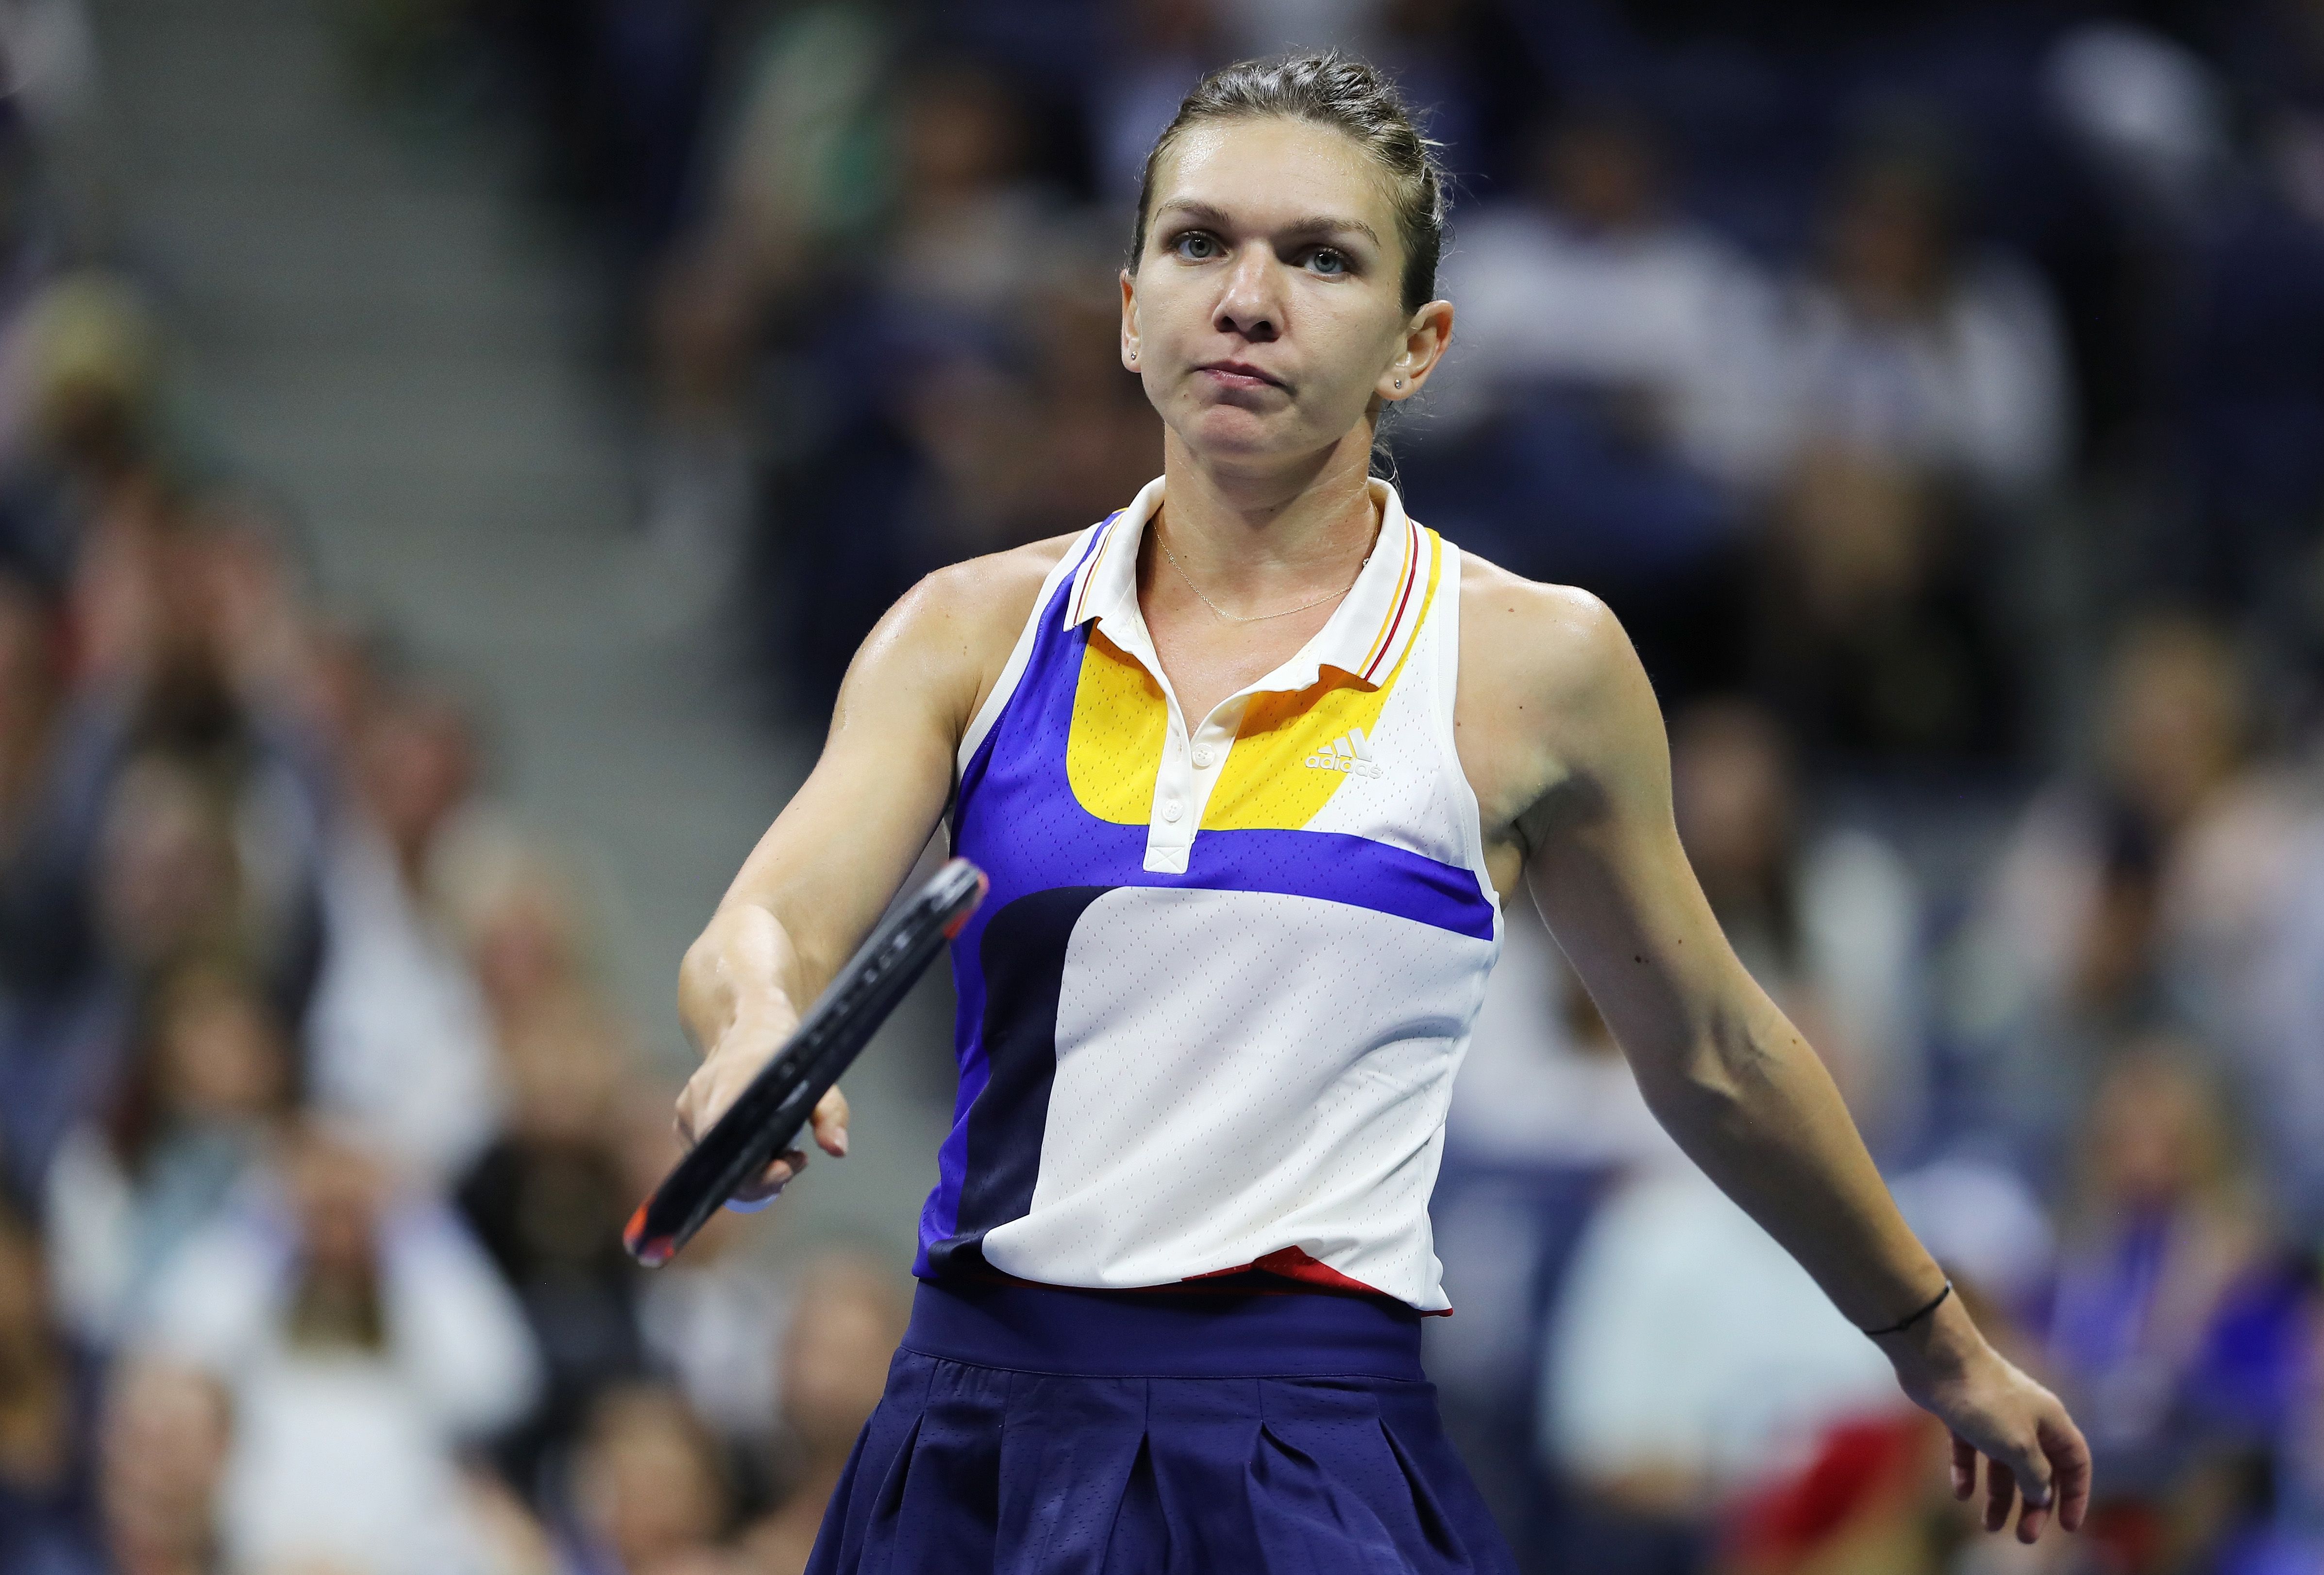 niebla tóxica mamífero capacidad Maria Sharapova wows US Open crowd in first major match since doping ban |  CNN